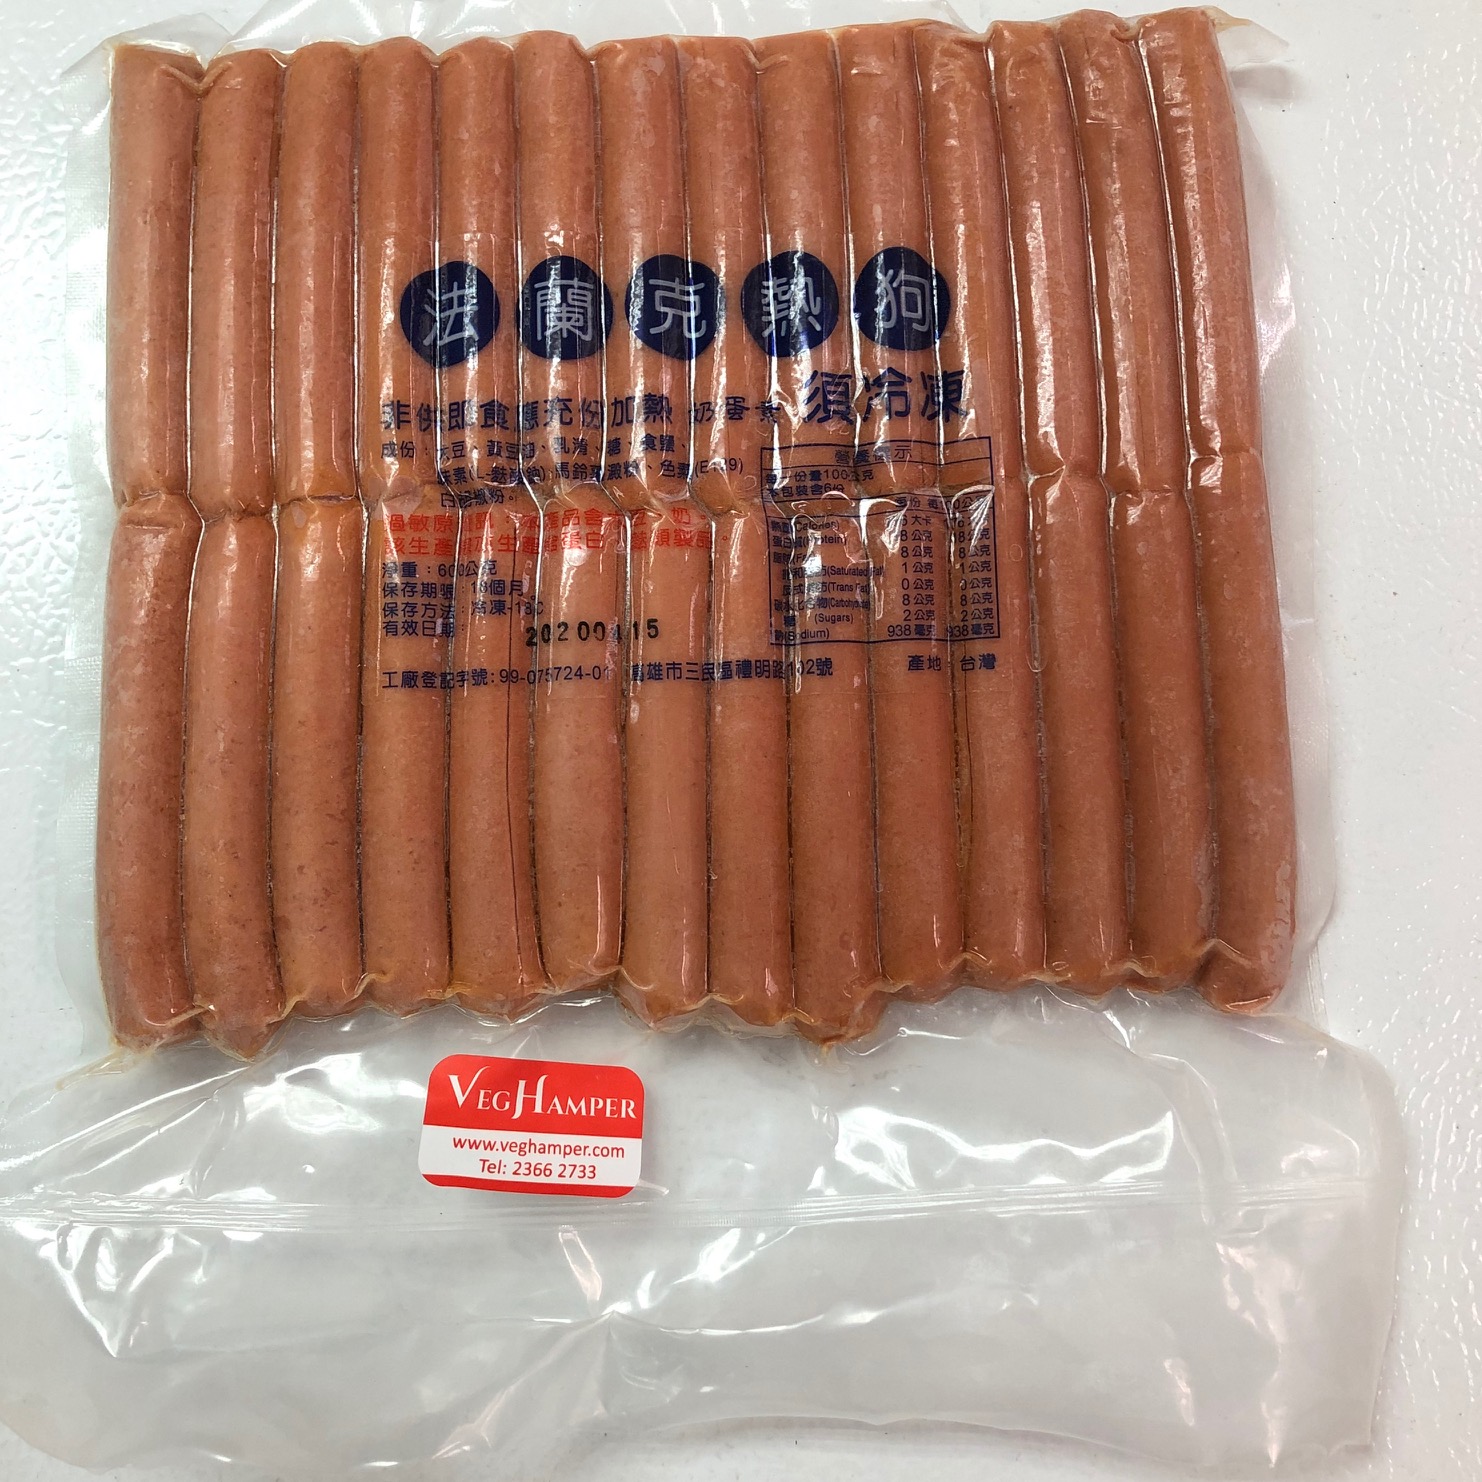 Vegerarian Hot Dog (600g/pack)(ovo)